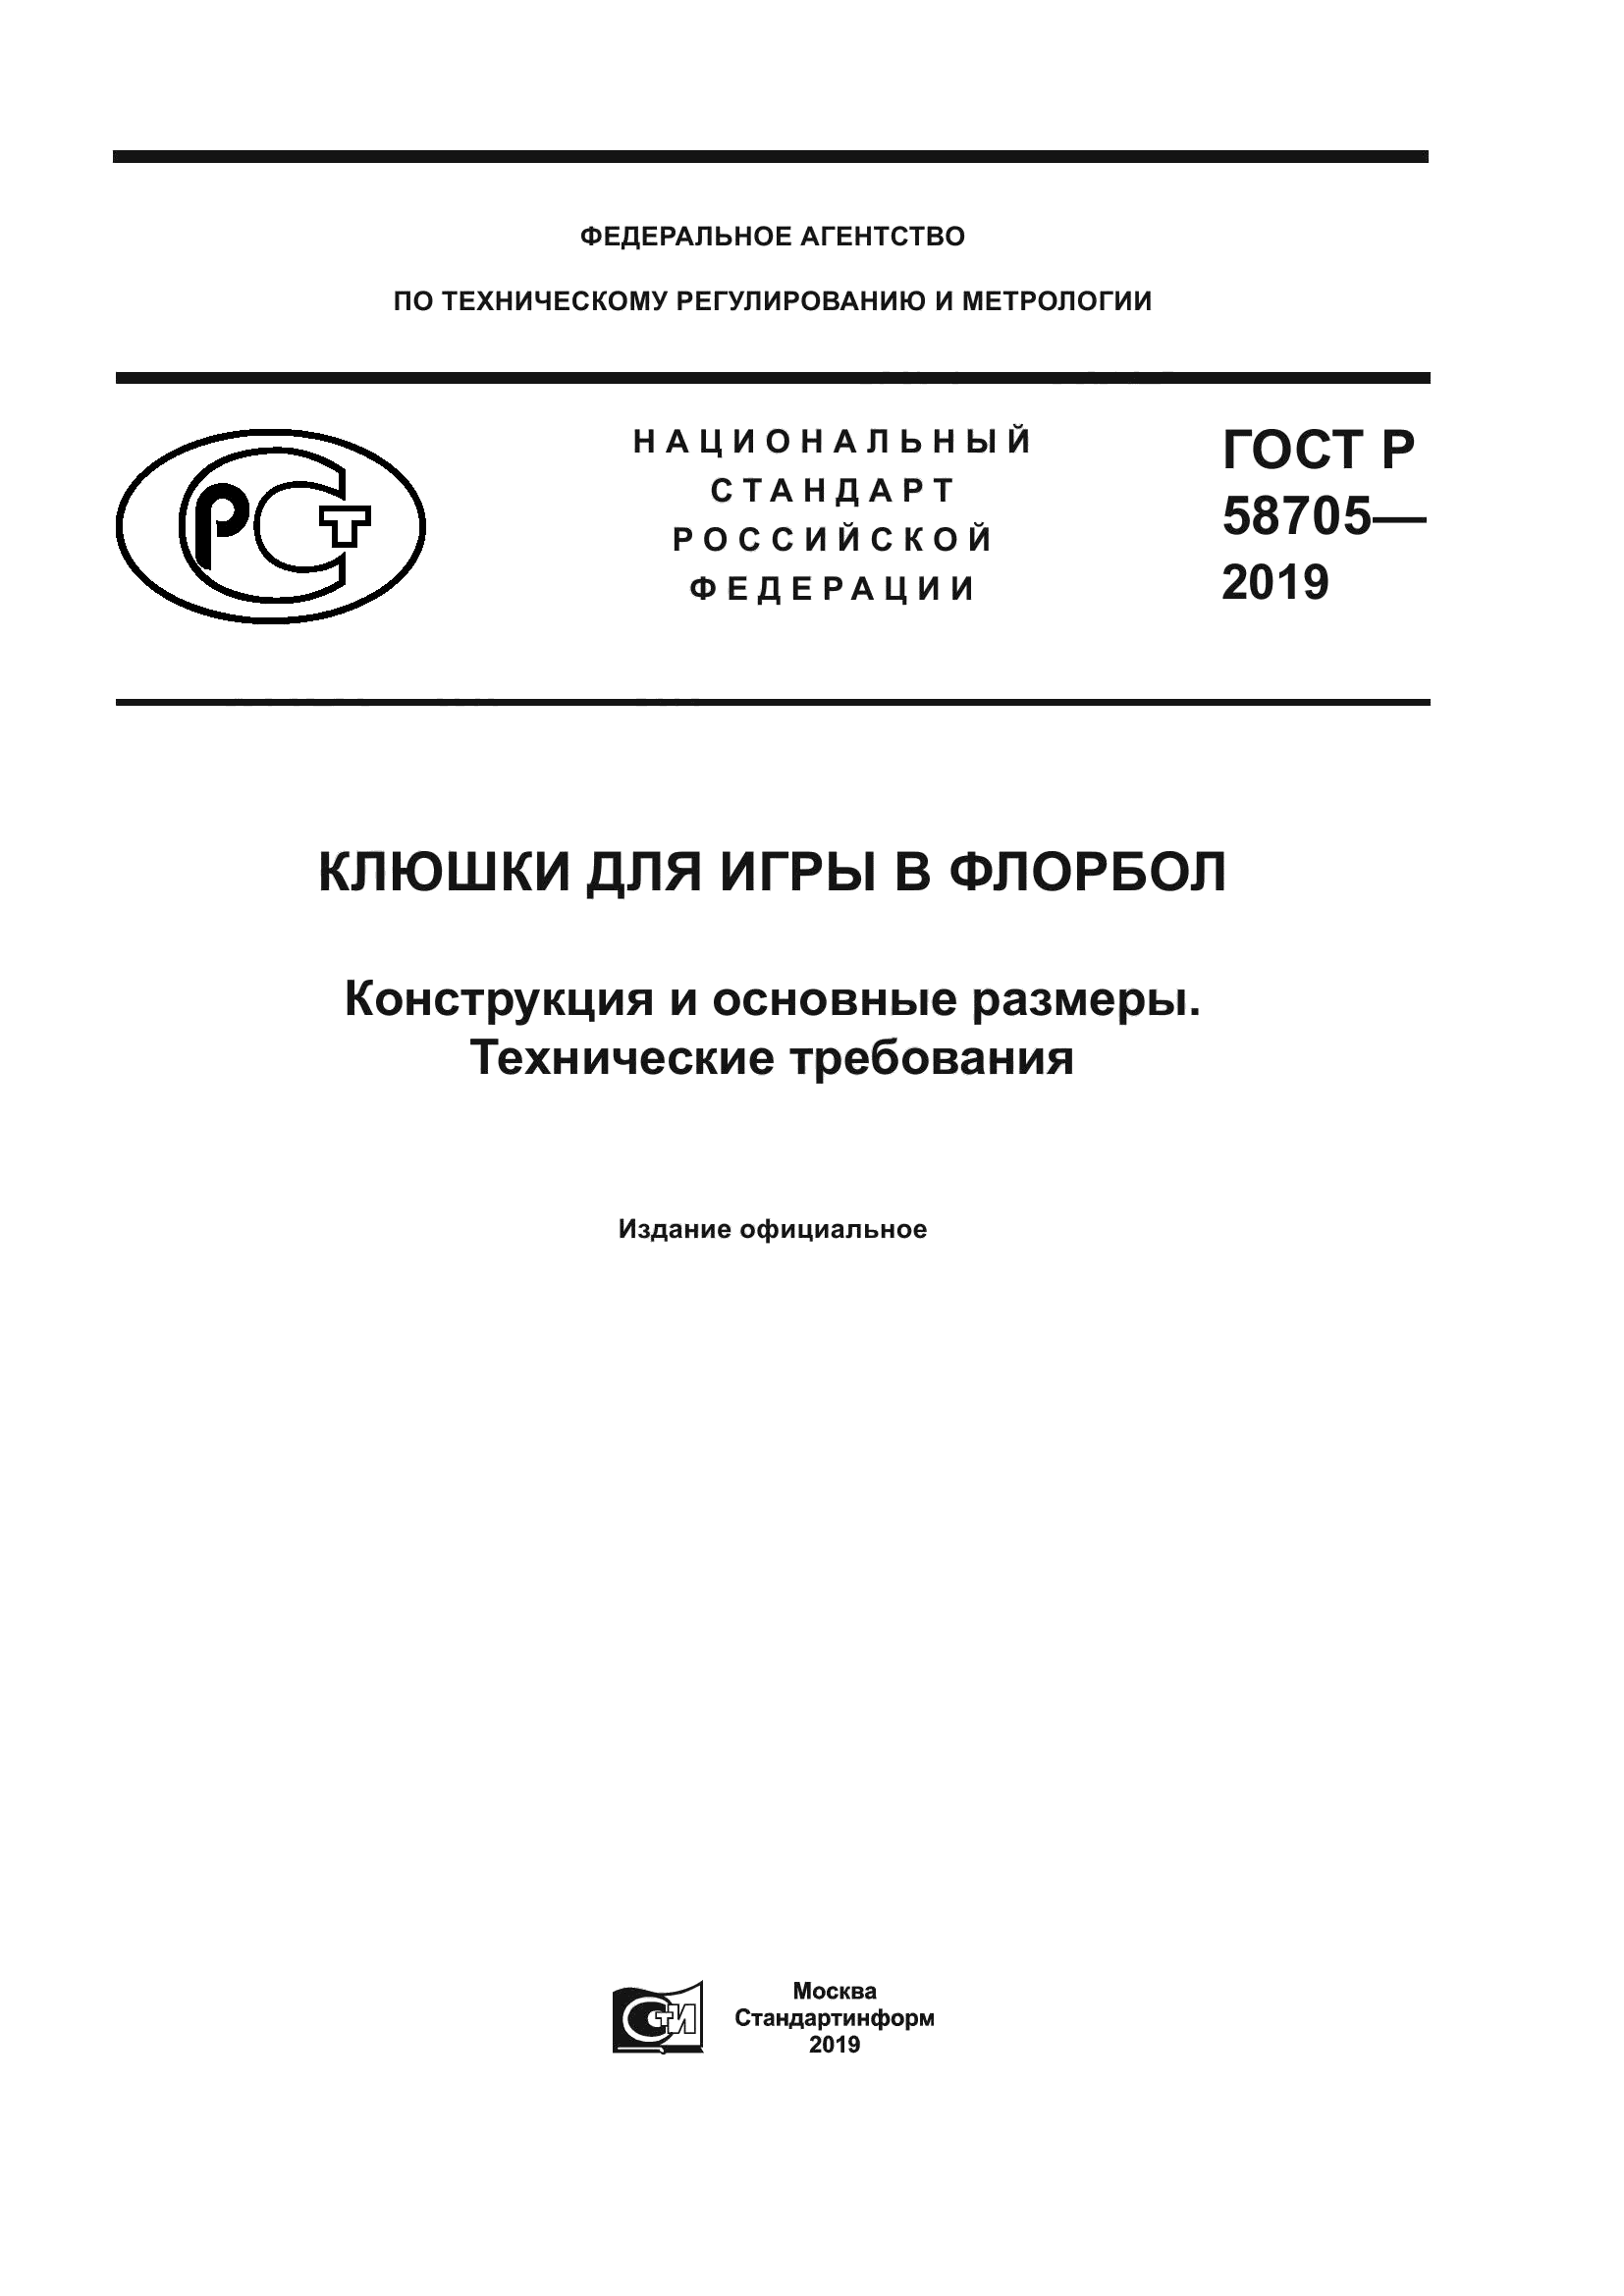 ГОСТ Р 58705-2019